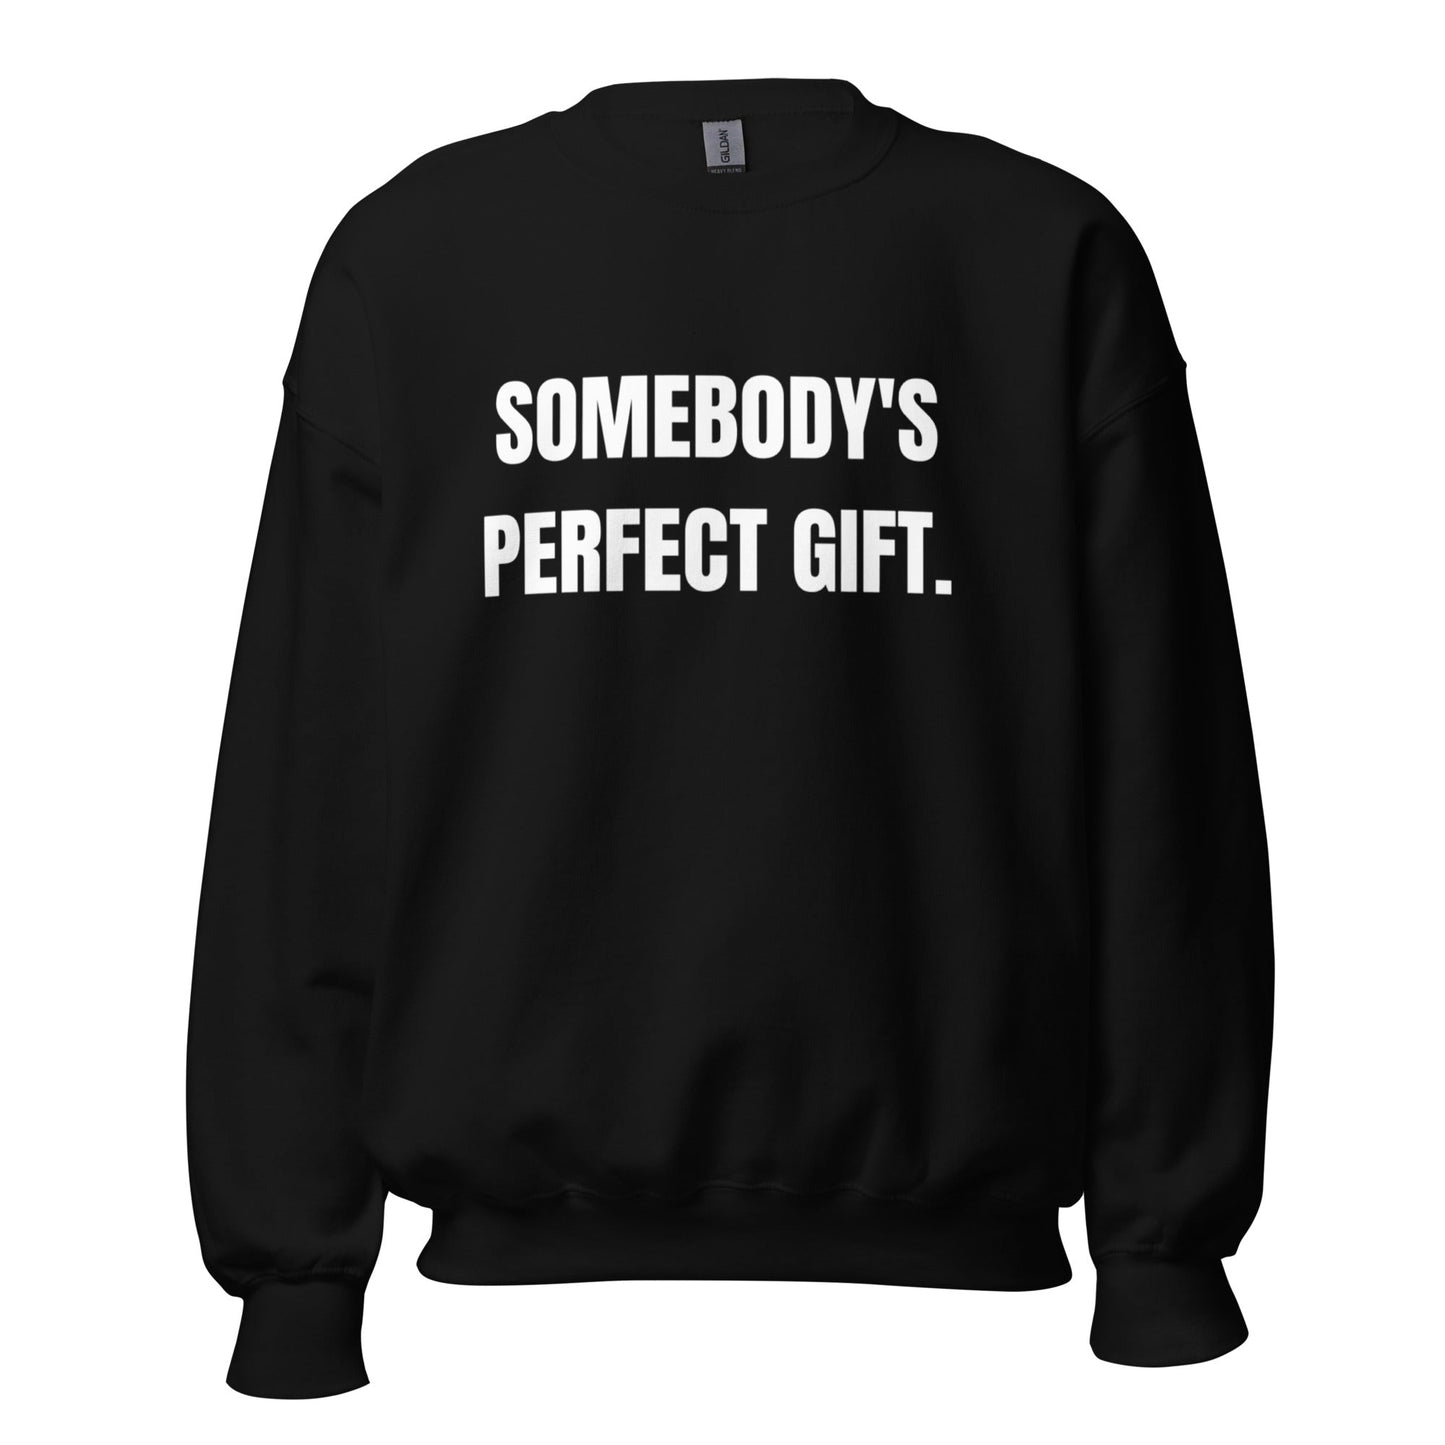 Somebody's perfect gift Unisex Sweatshirt - Catch This Tea Shirts